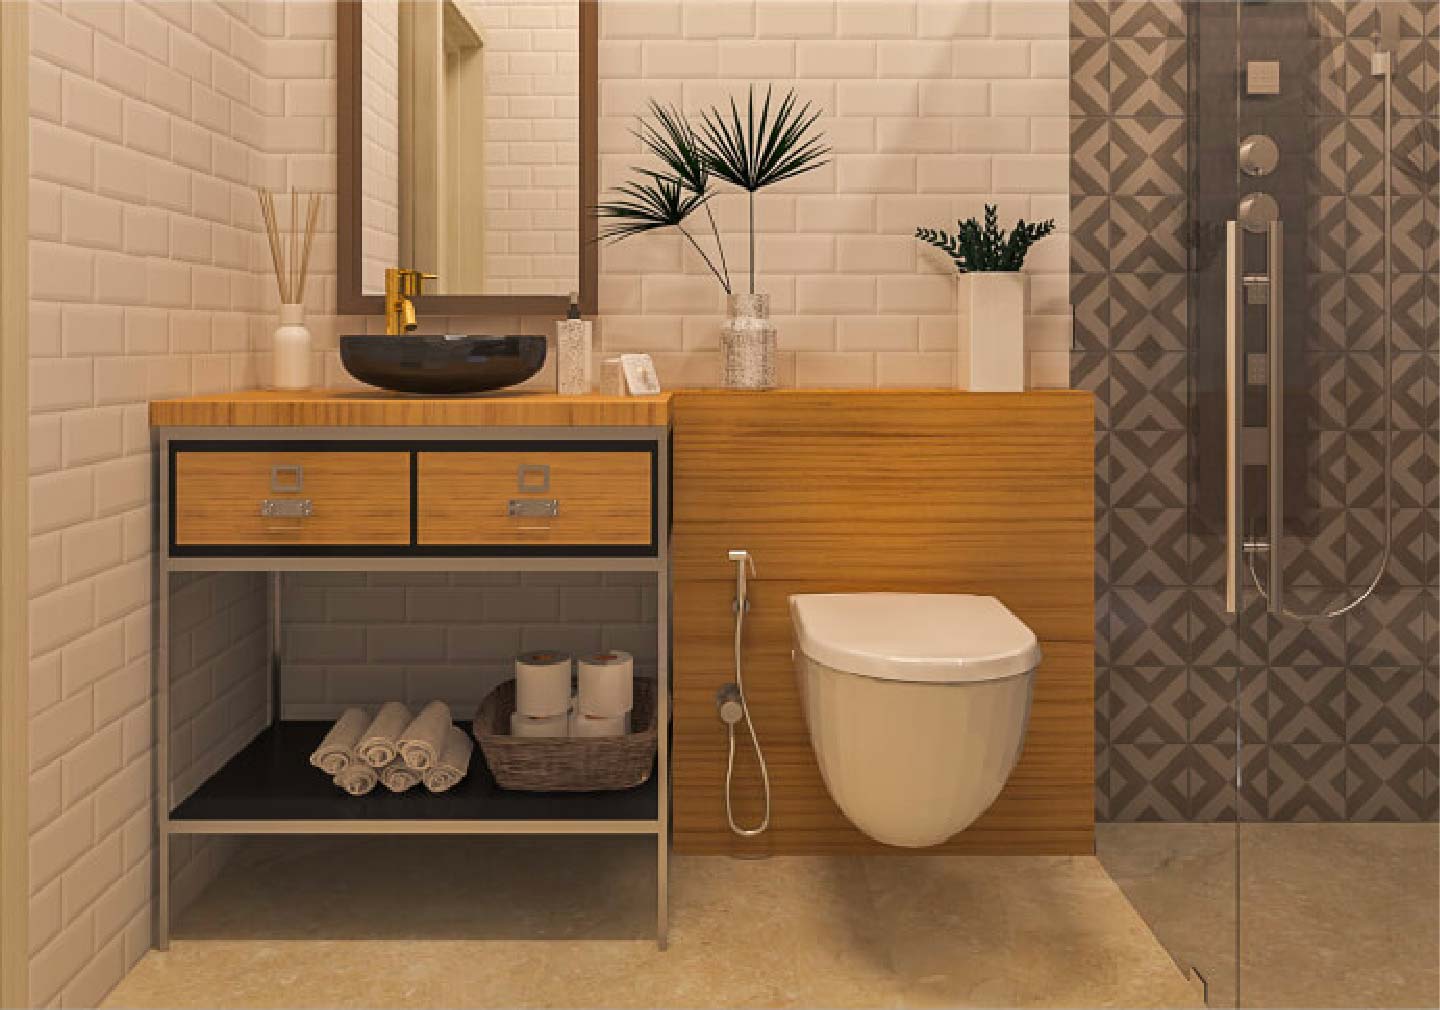 Wall-mount Toilet - Bathroom Interior Design